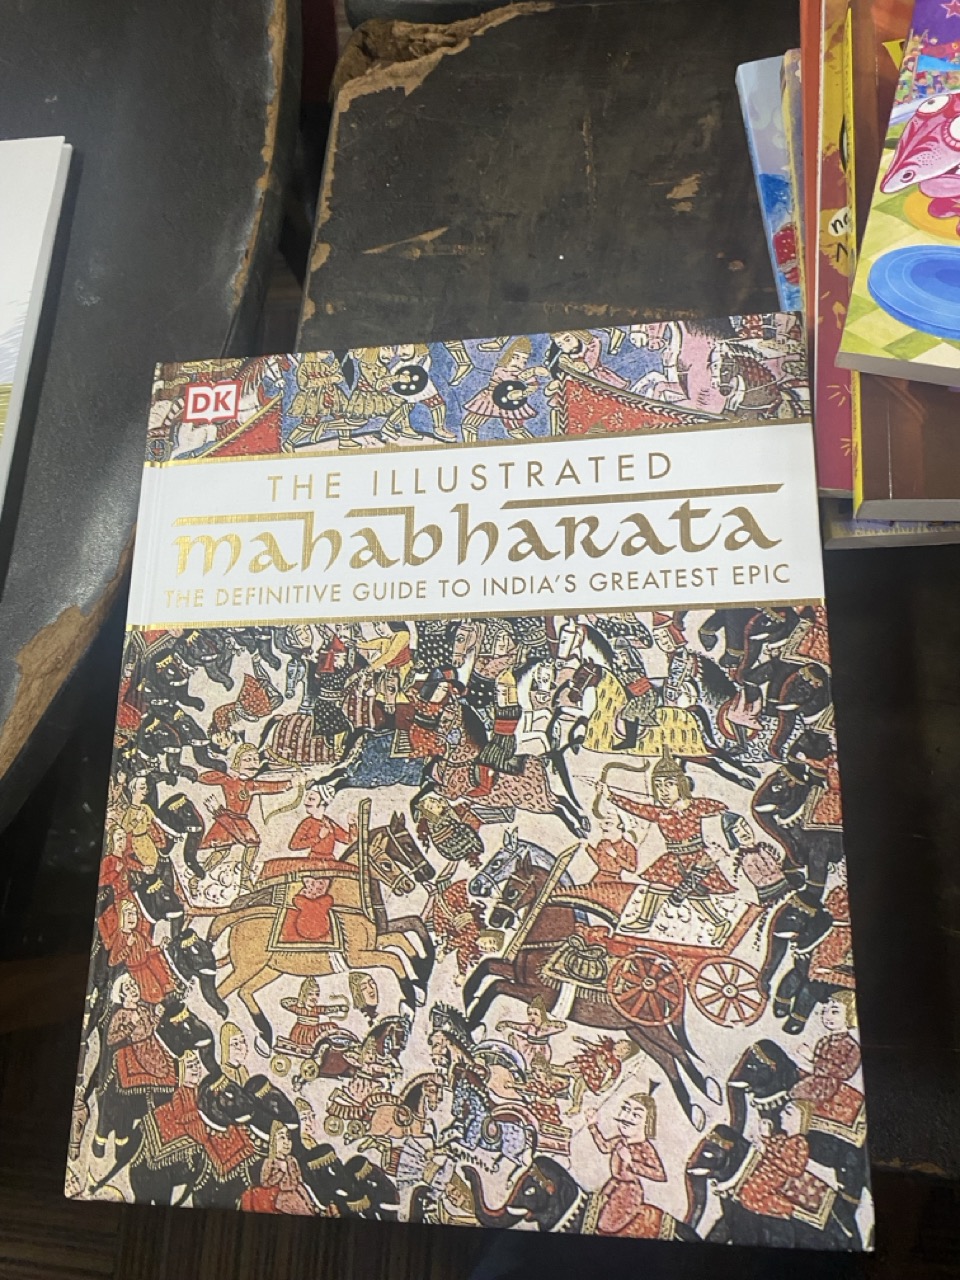 The illustrated Mahabharata from DK.
